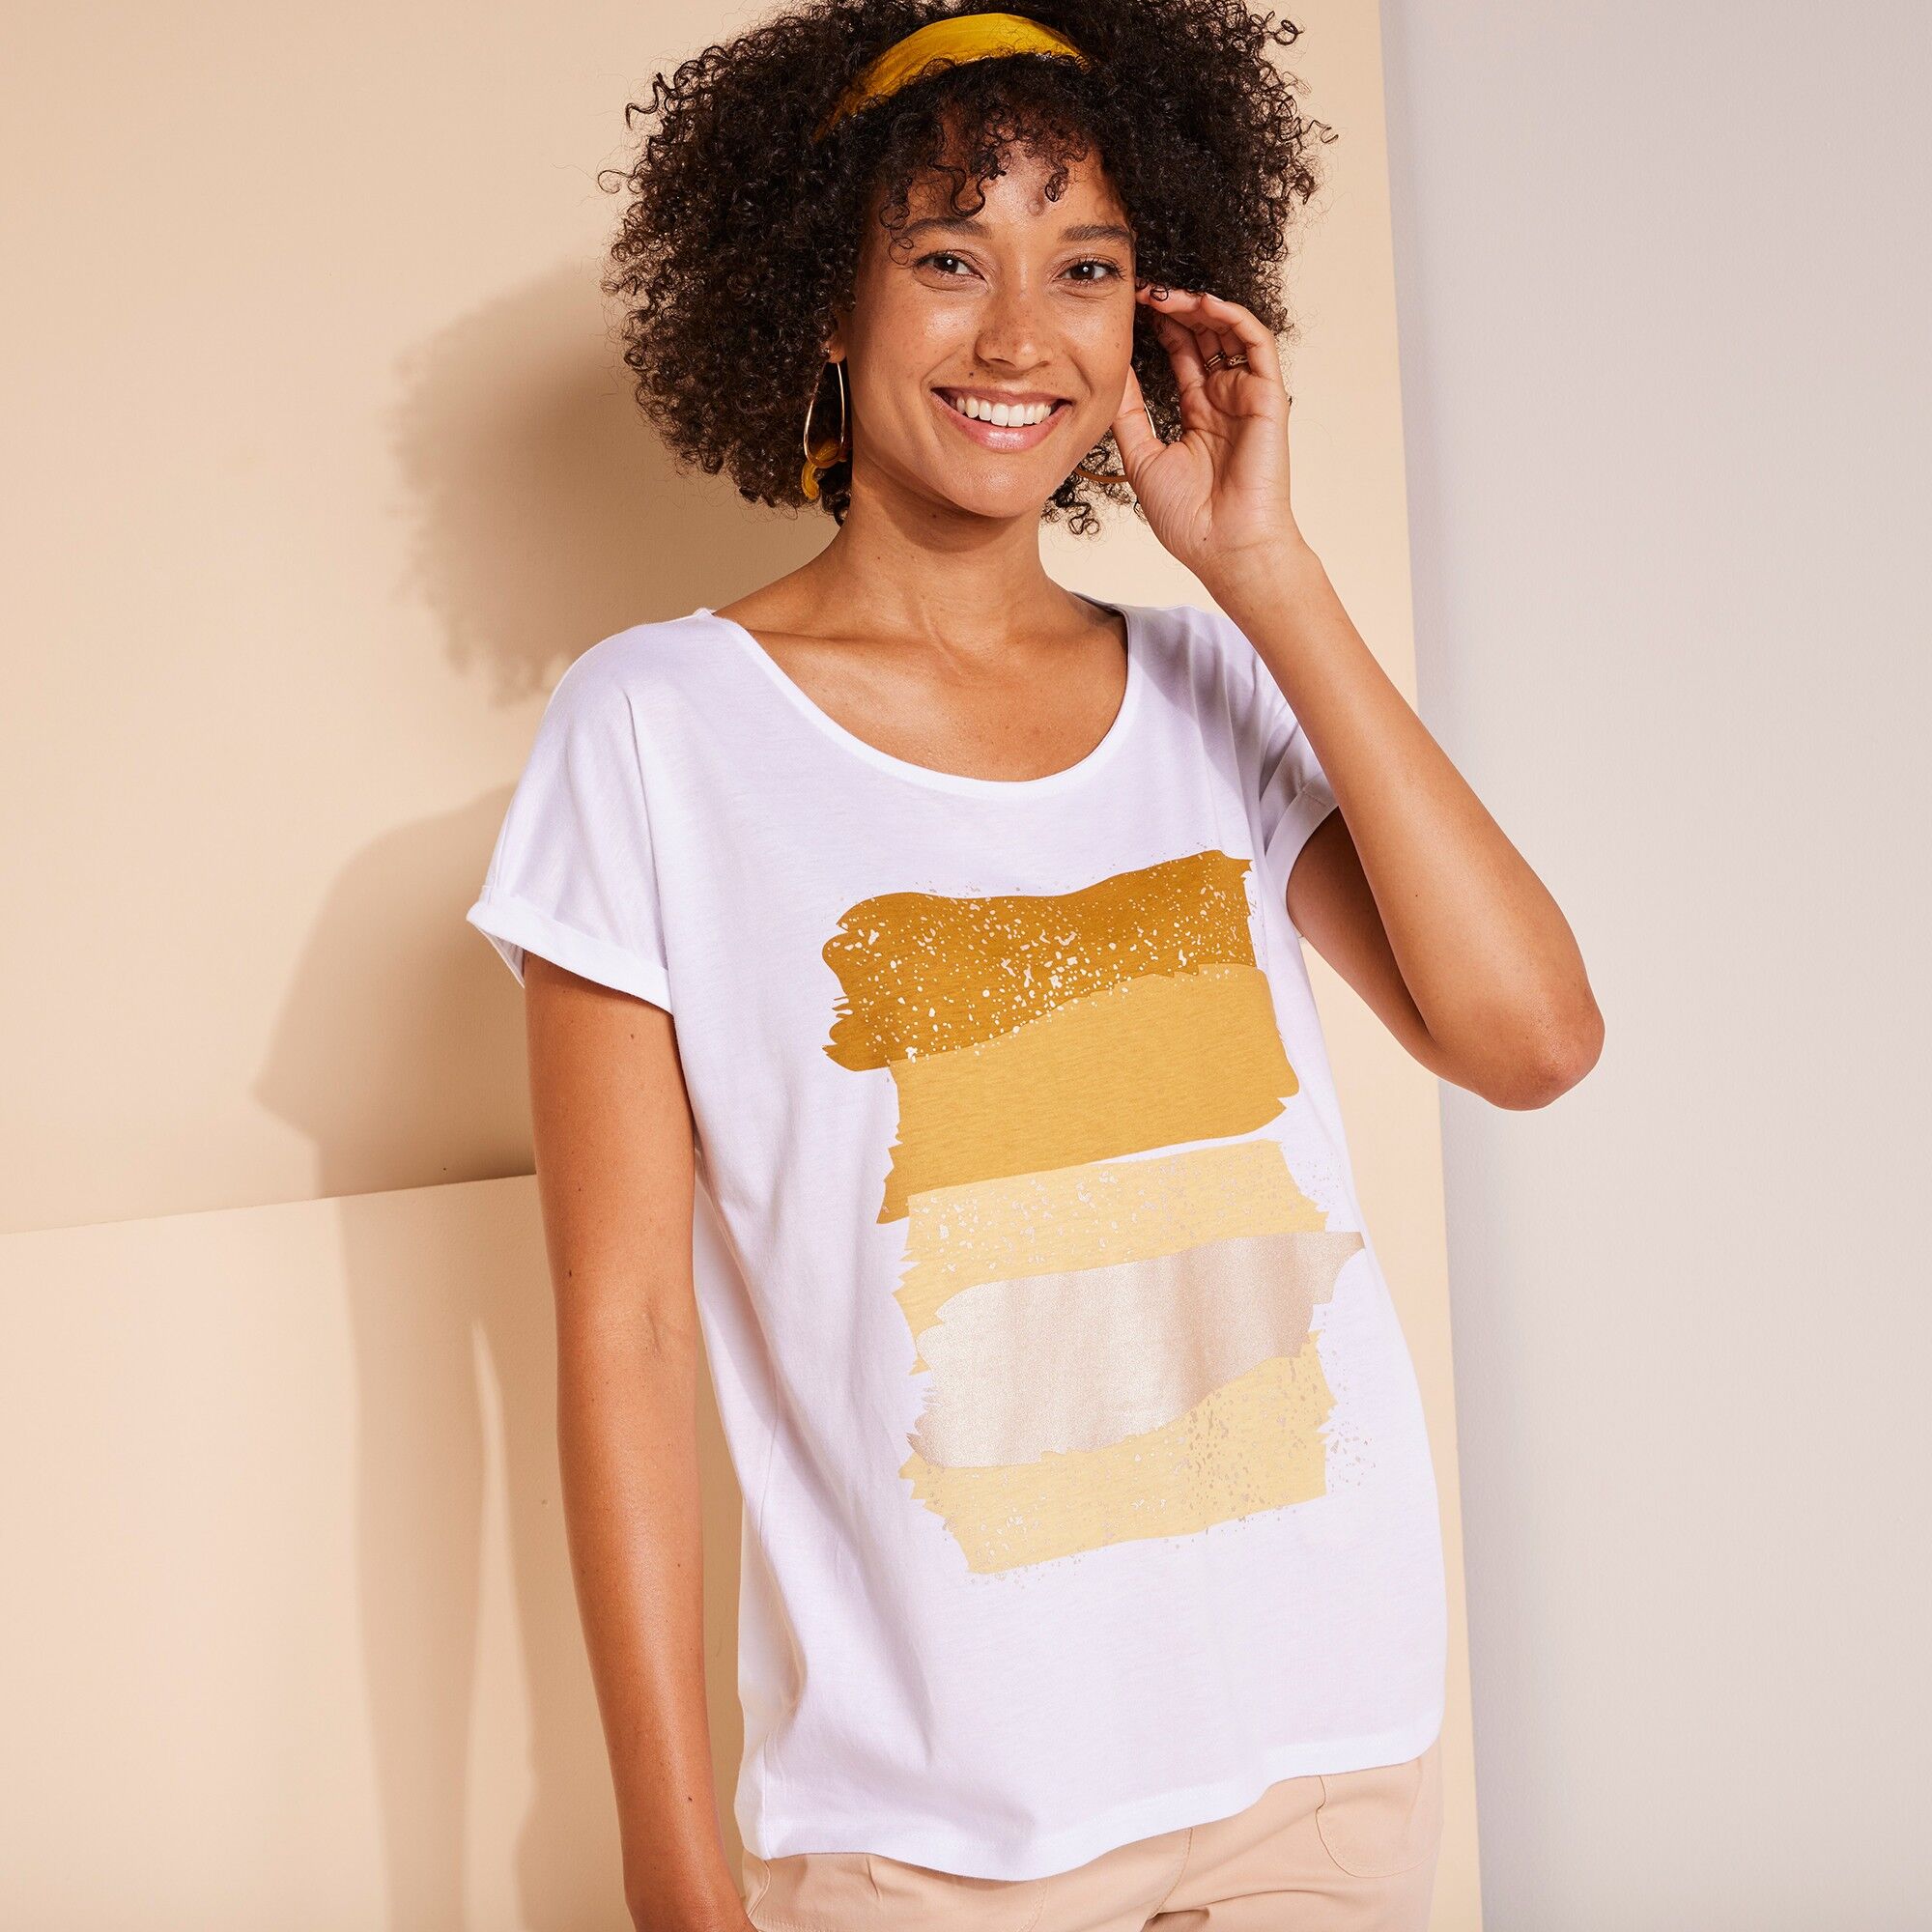 Blancheporte T-shirt Boite Imprimé "arty", Maille Jersey - Femme Jaune 34/36